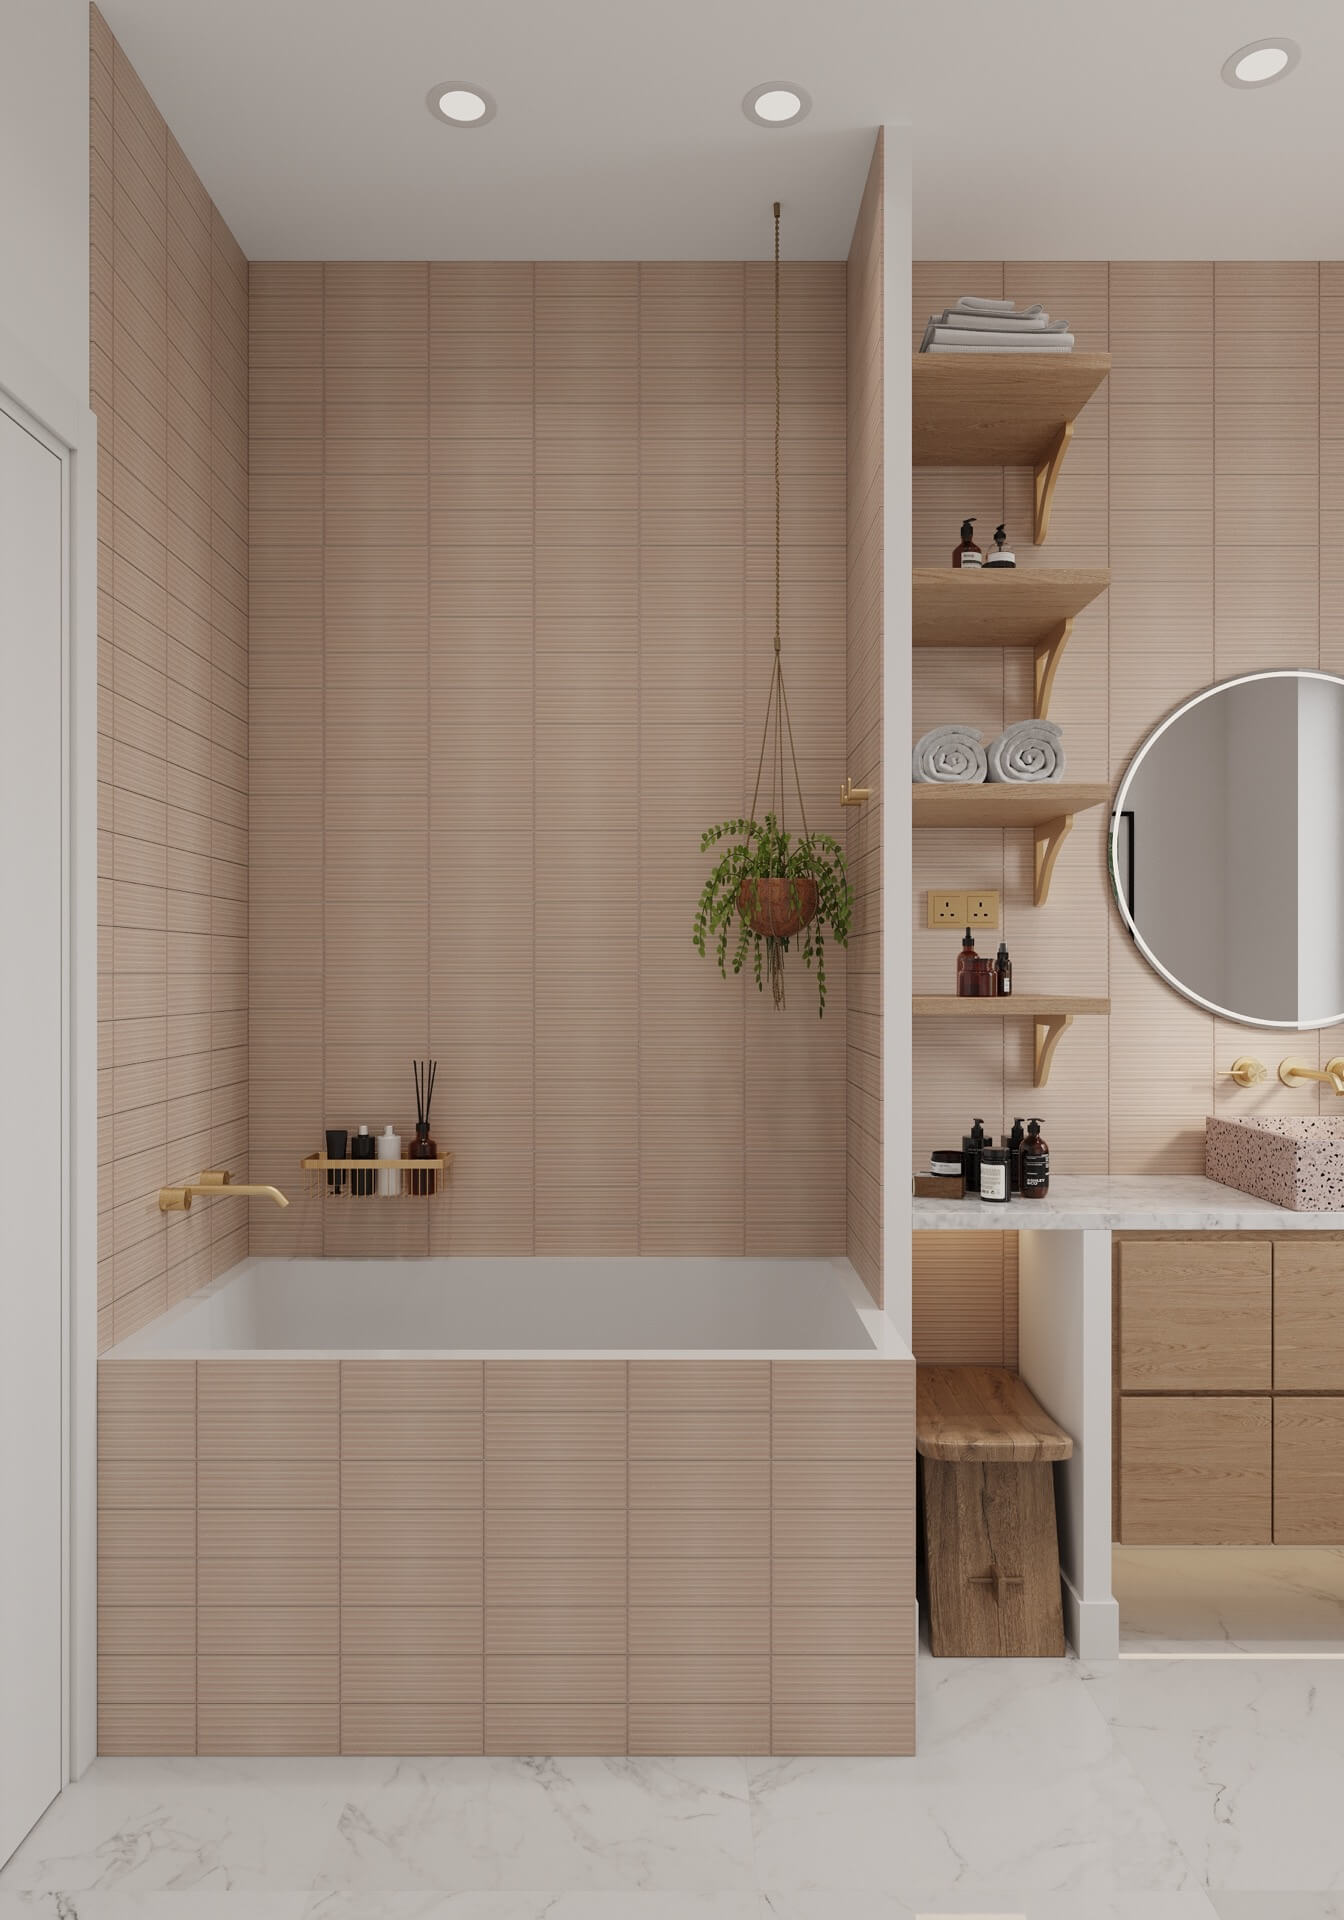 Japanese inspired pink bathroom by Interior designer Raluca Vaduva of Detail Movement